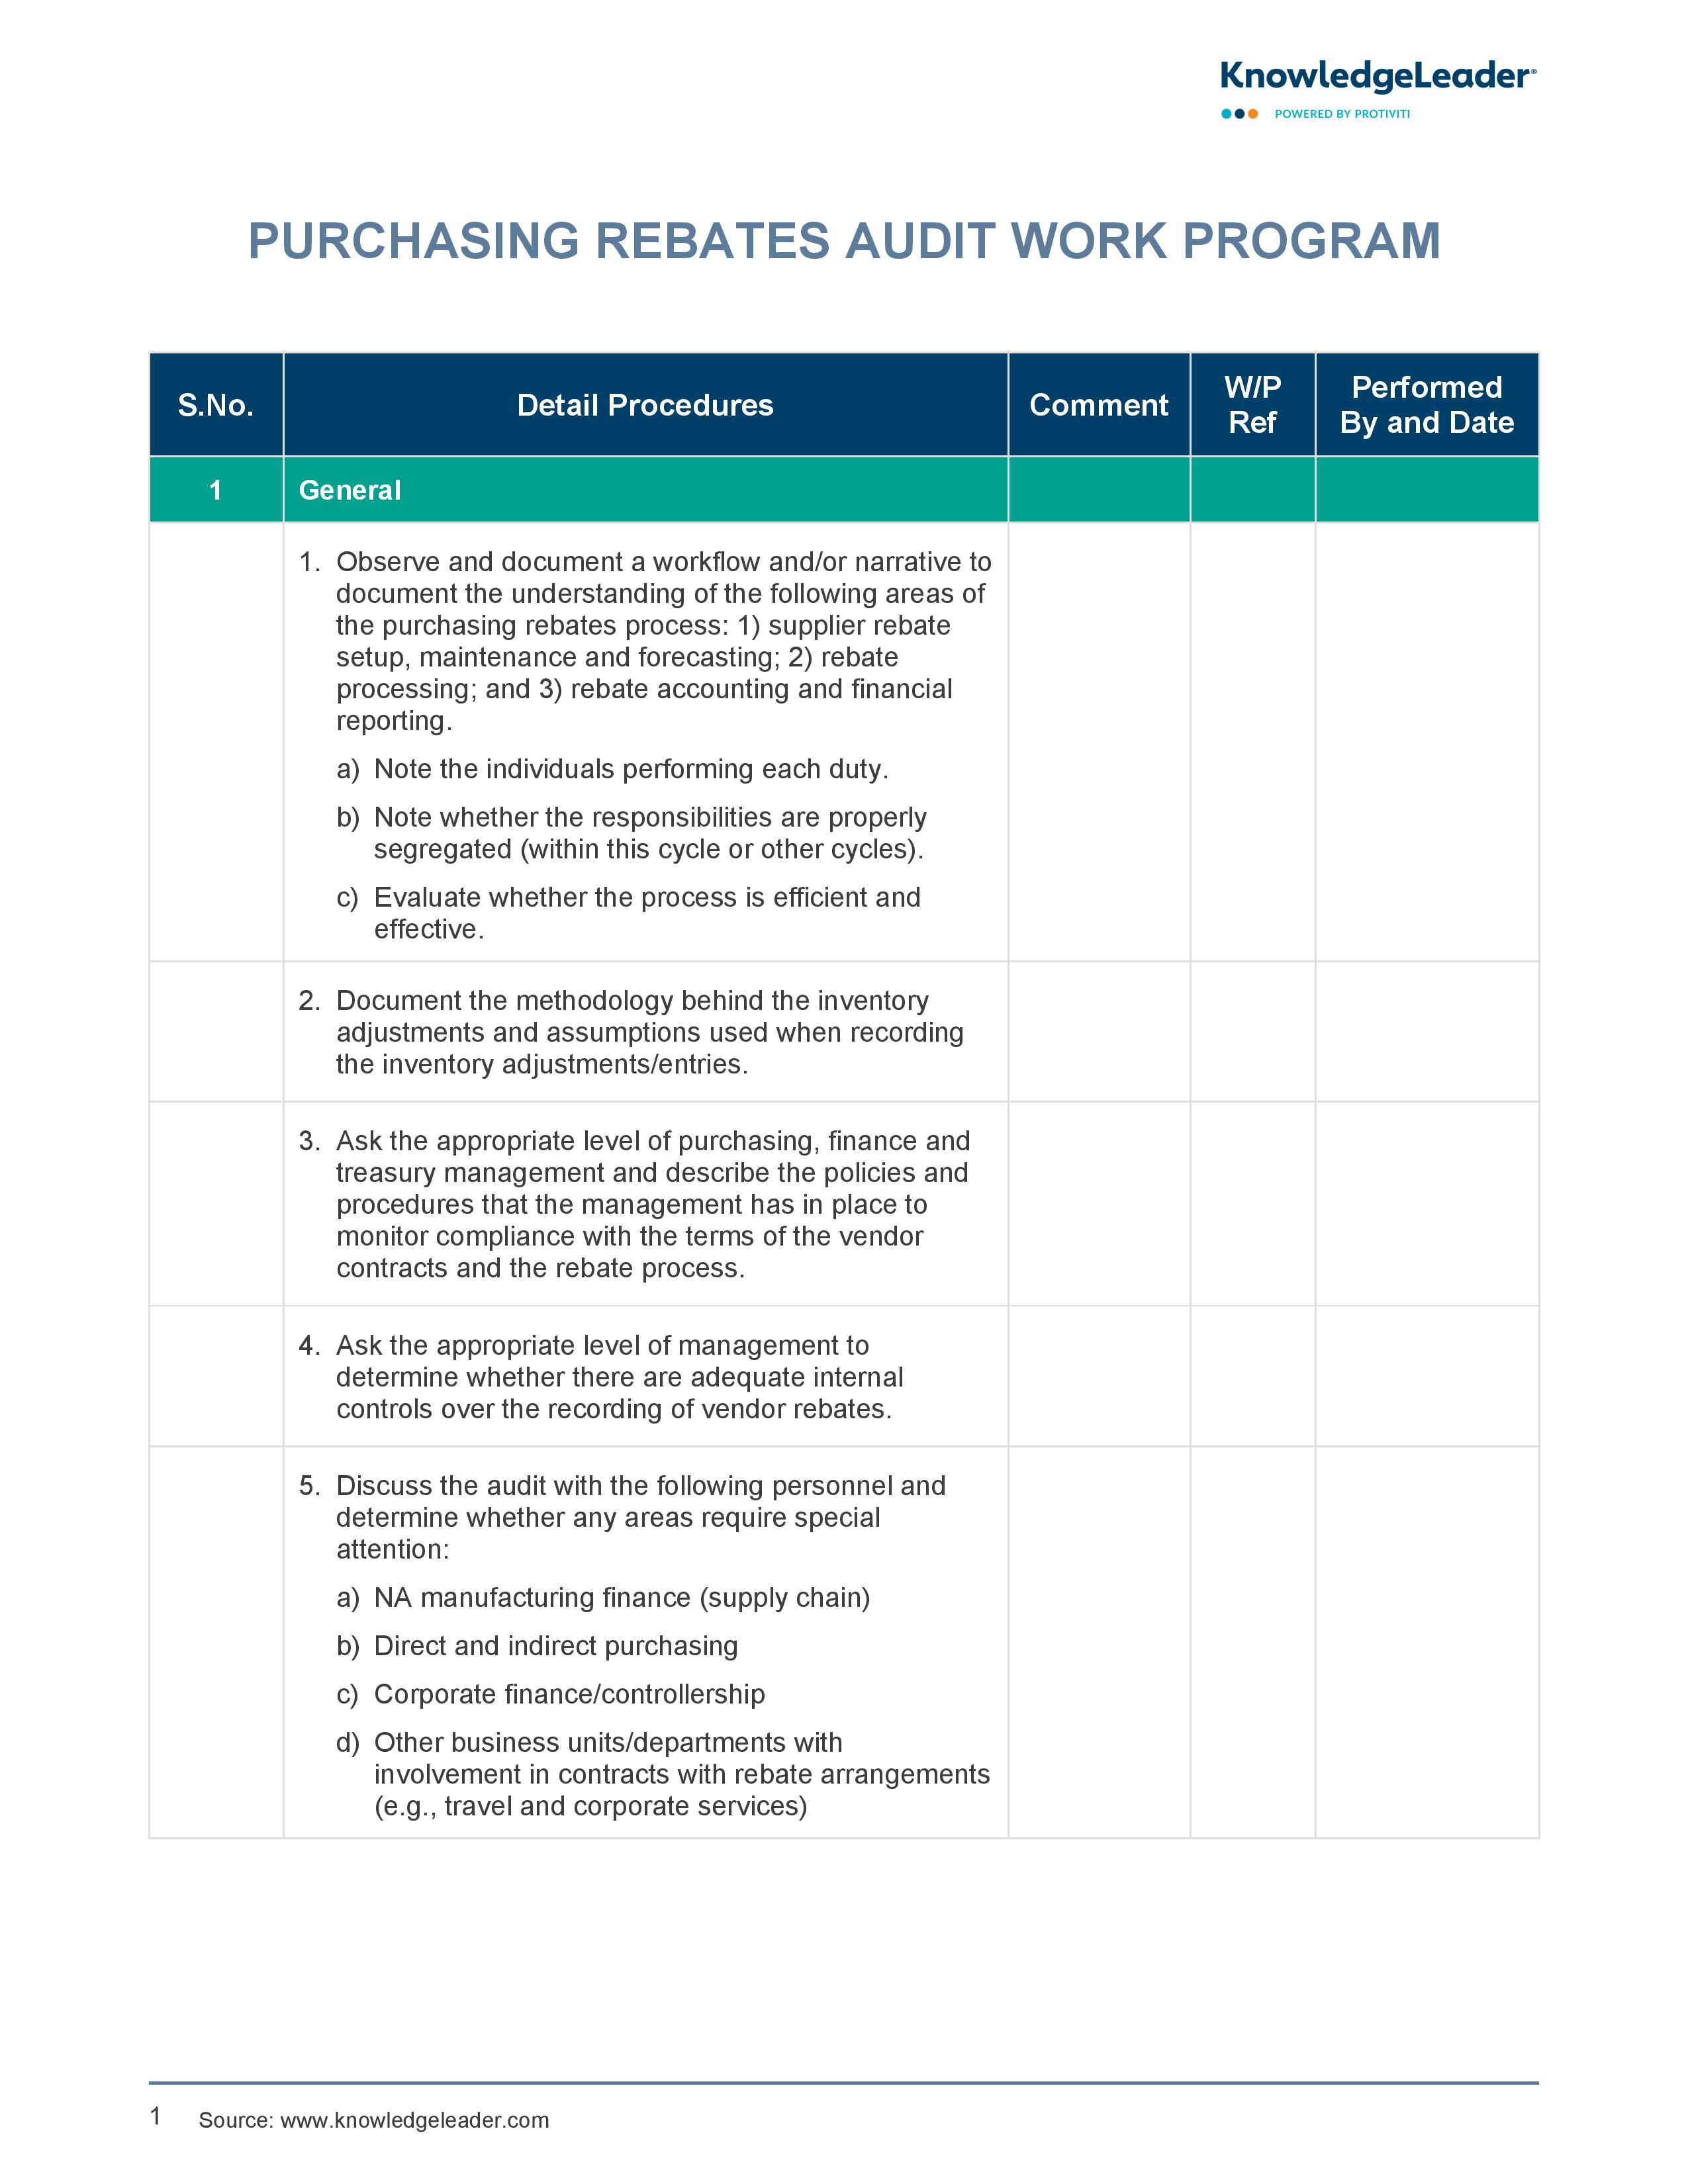 Screenshot of the first page of Purchasing Rebates Audit Work Program